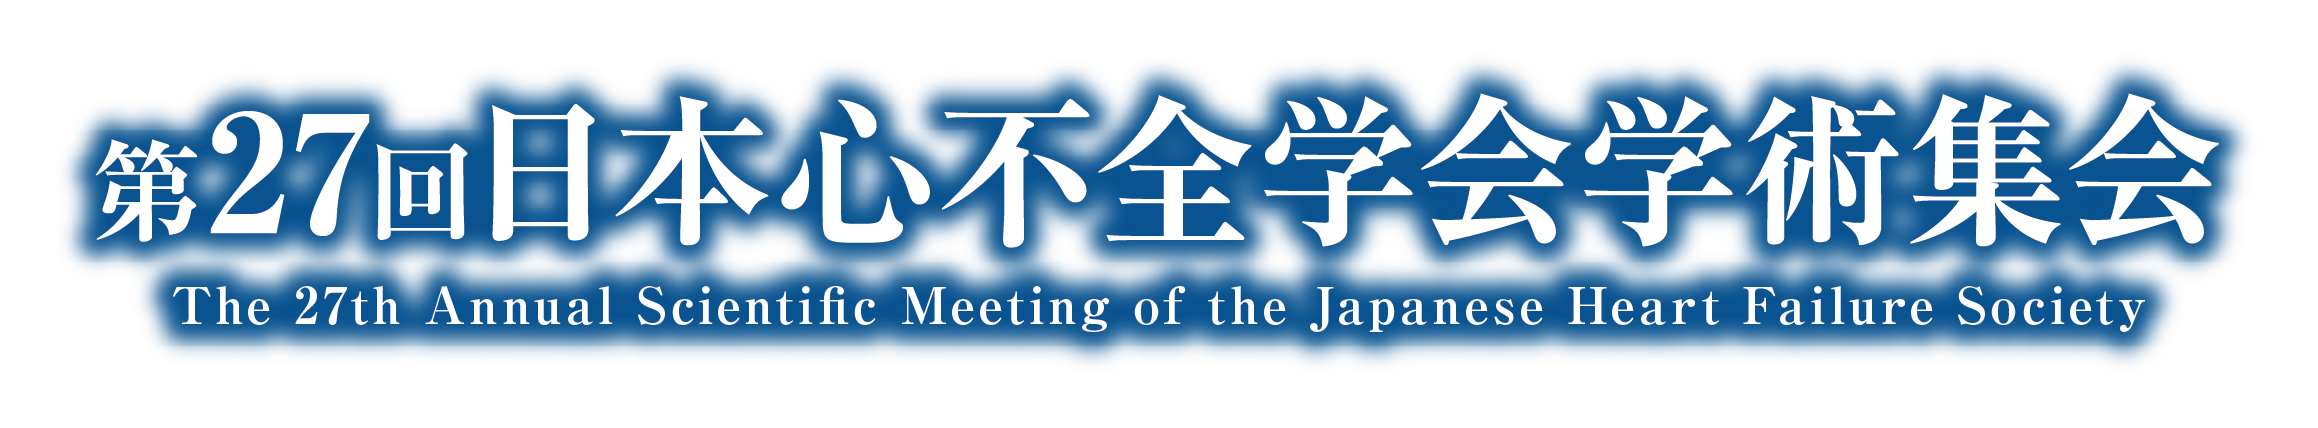 第27回日本心不全学会学術集会 The 27th Annual Scientific Meeting of the Japanese Heart Failure Society